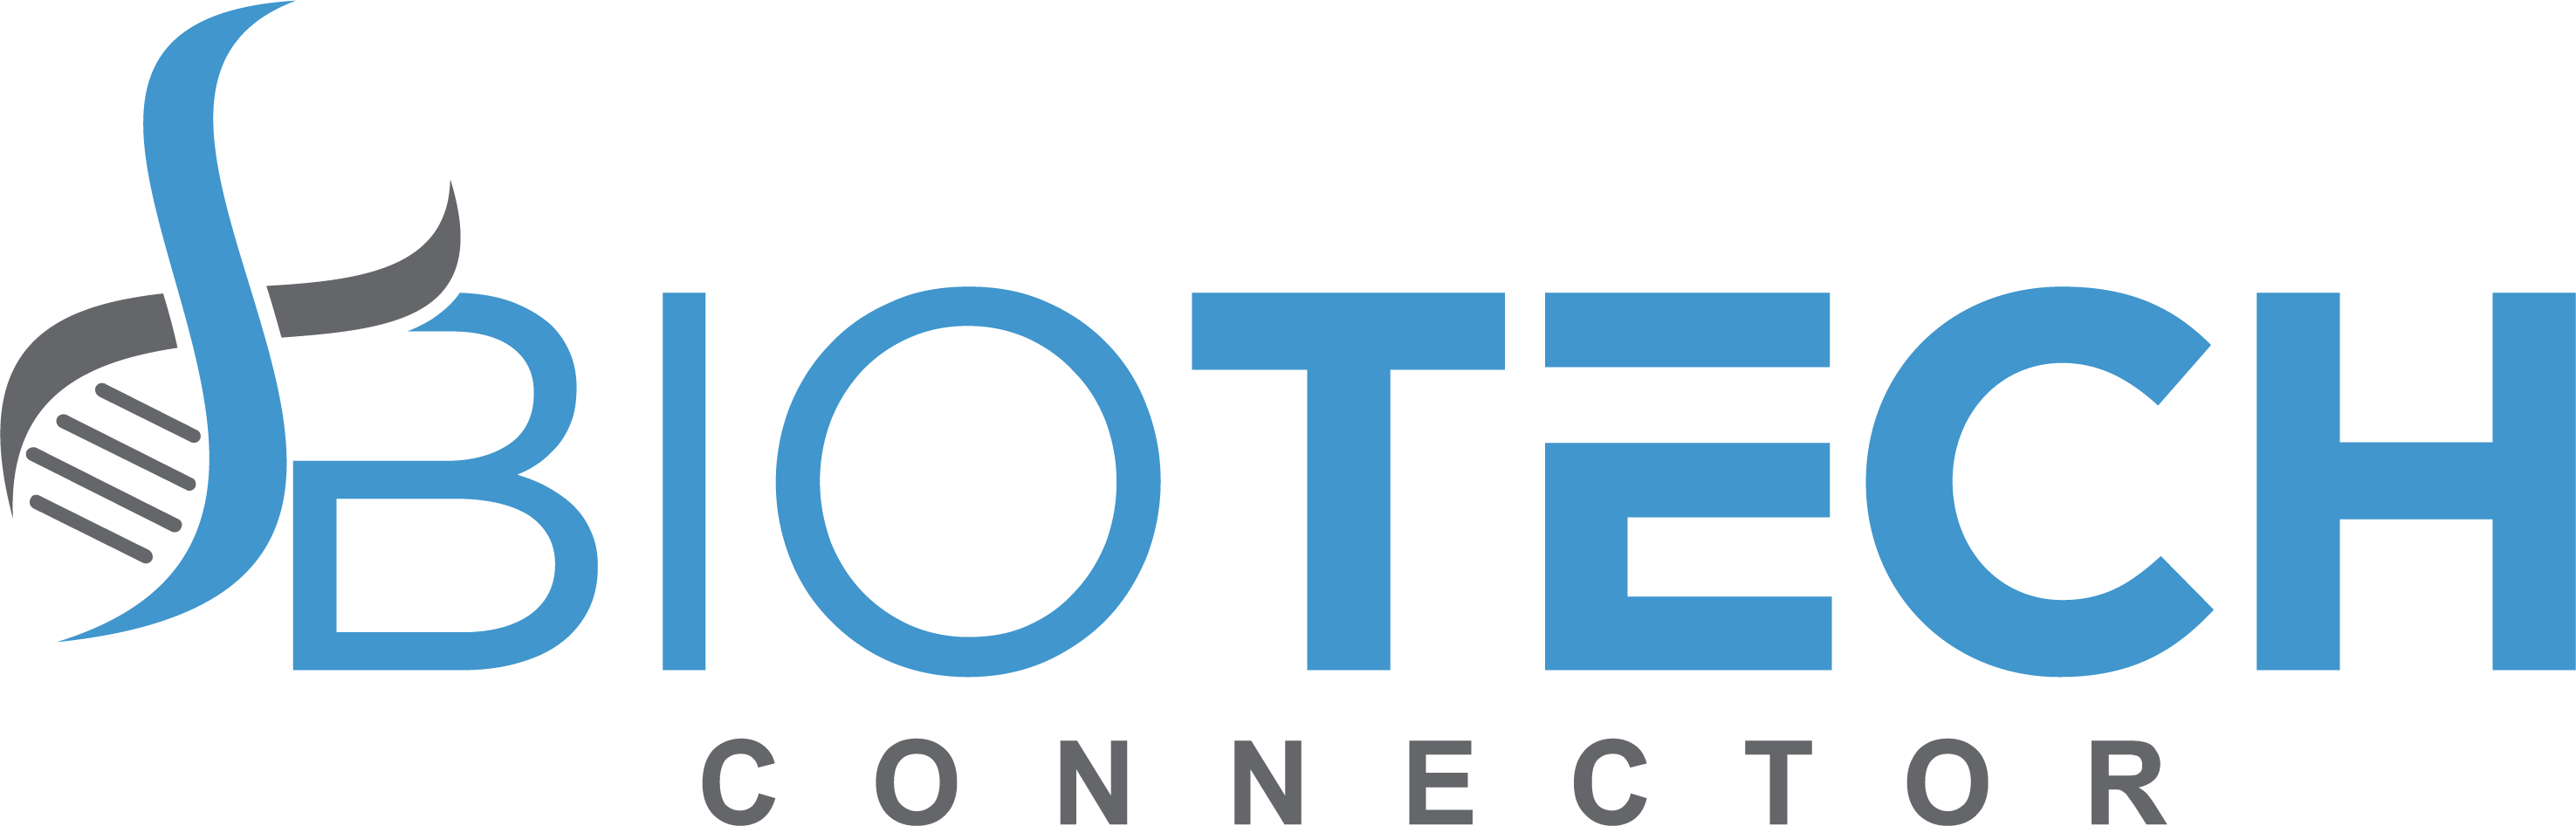 Biotech Connector logo